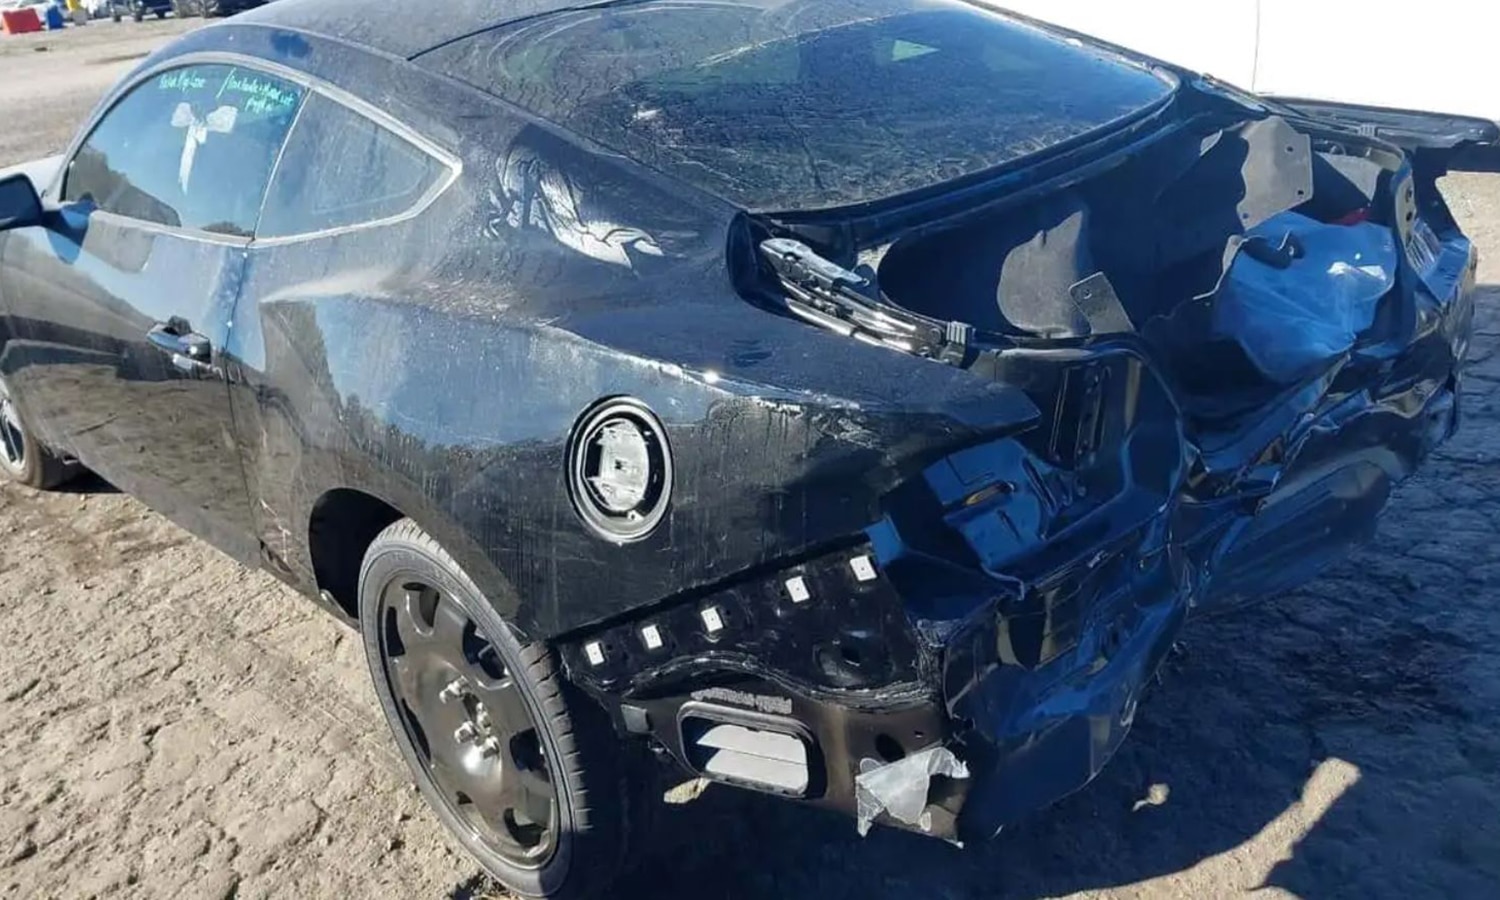 Accidente Ford Mustang 25 kilómetros